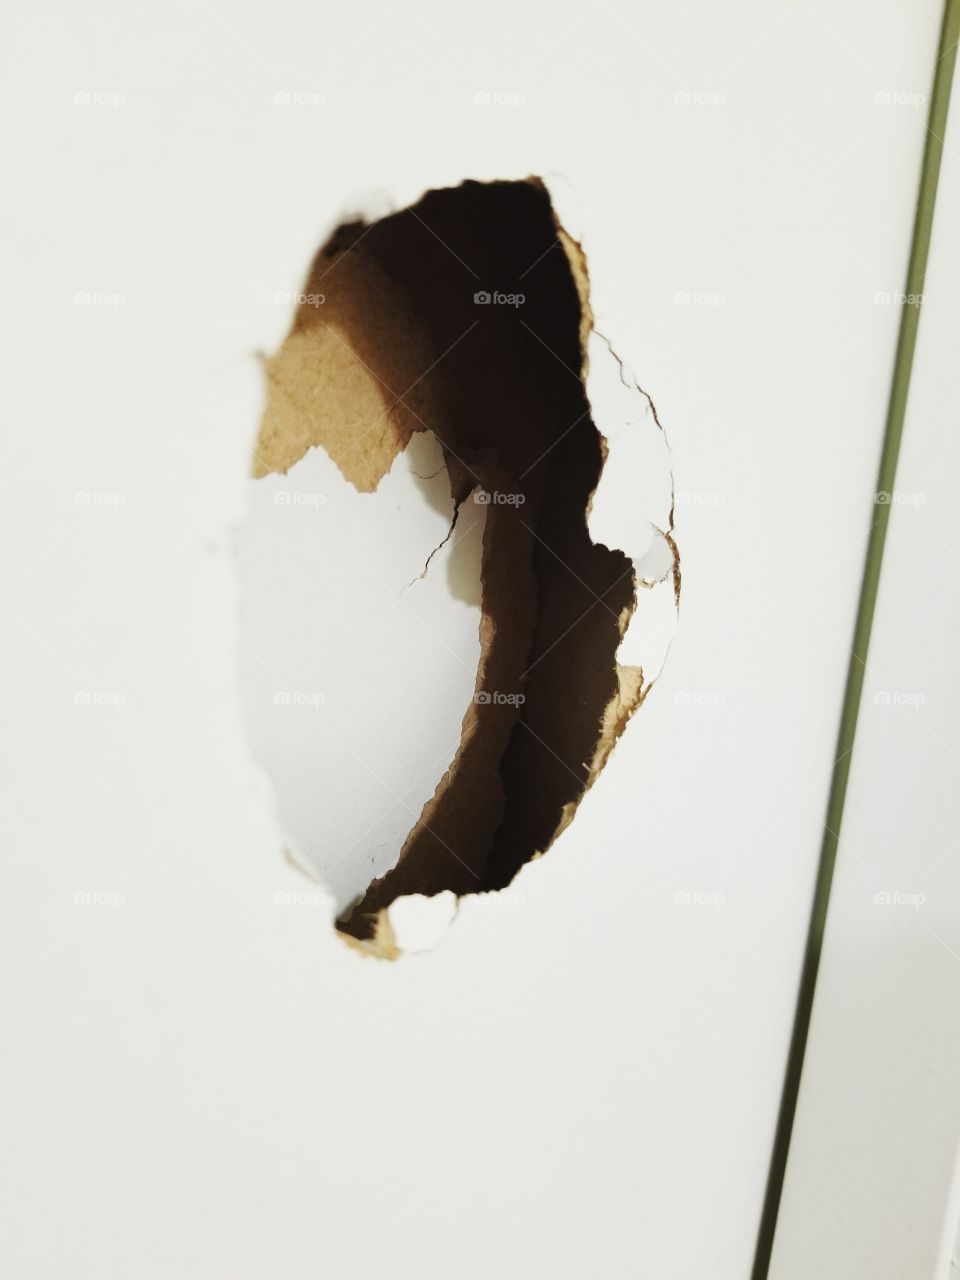 hole through the wall